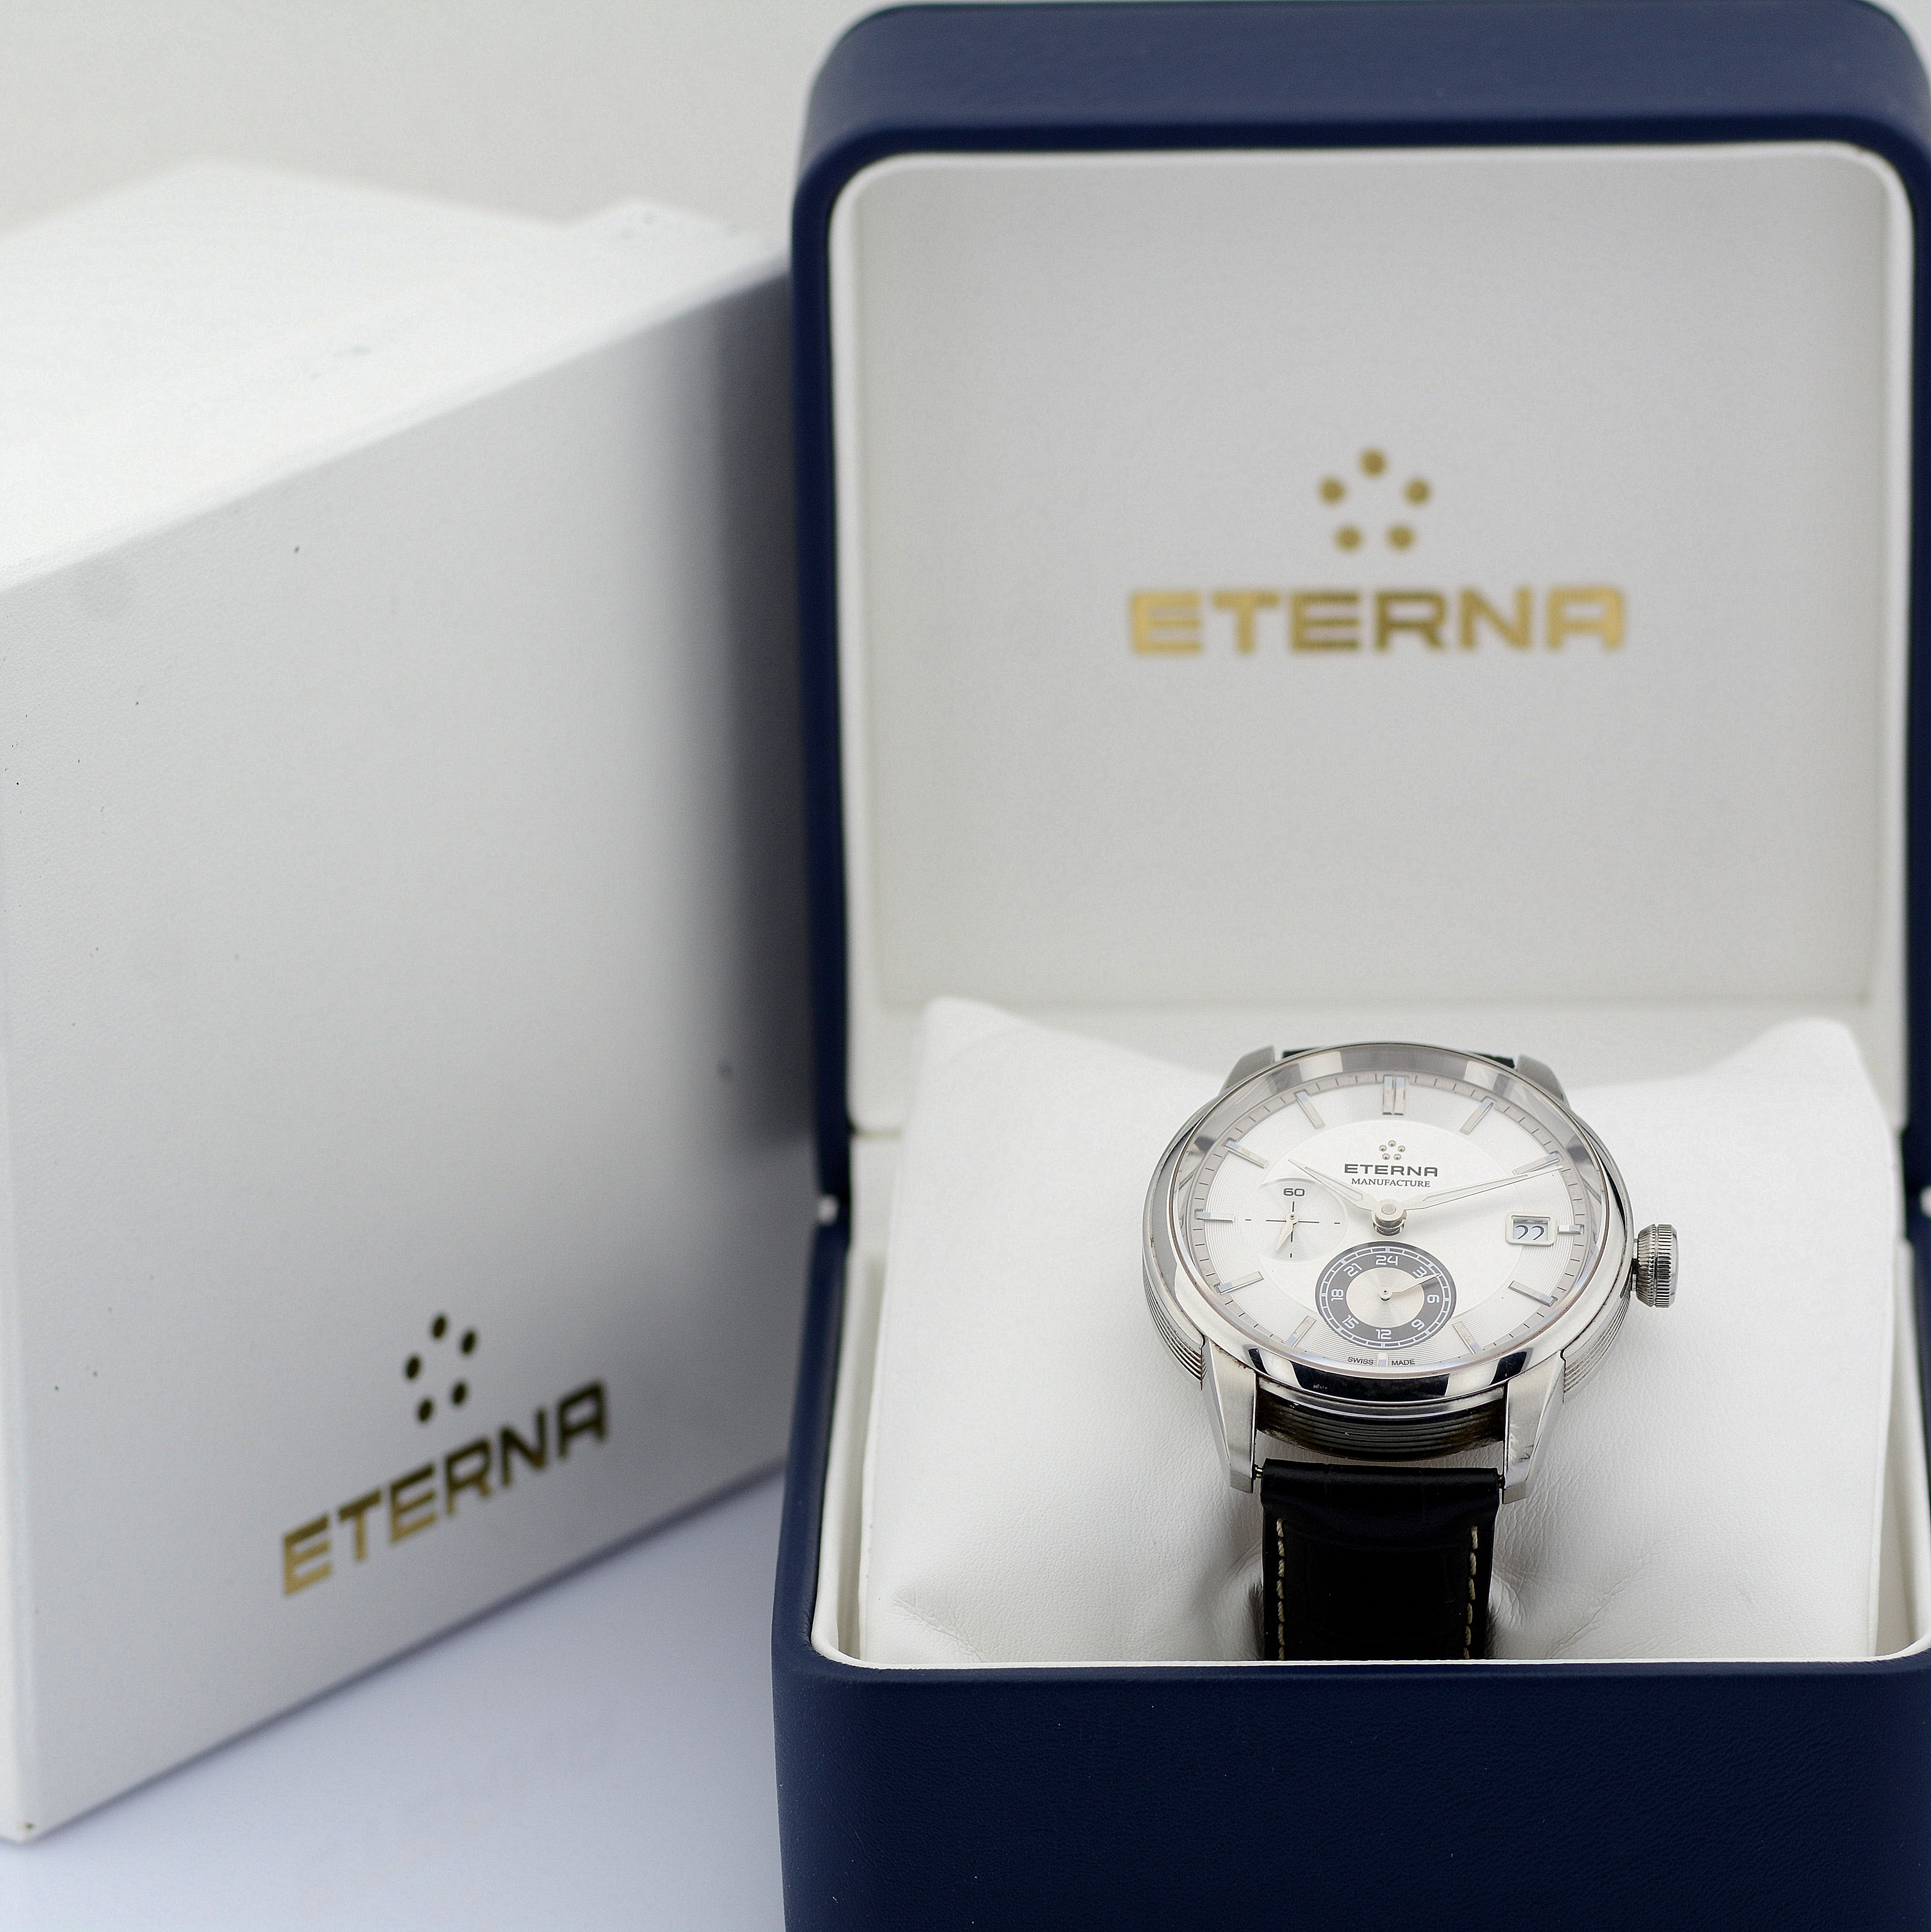 Eterna / Adventic GMT Manufacture Automatic Date - Gentlmen's Steel Wrist Watch - Image 6 of 10